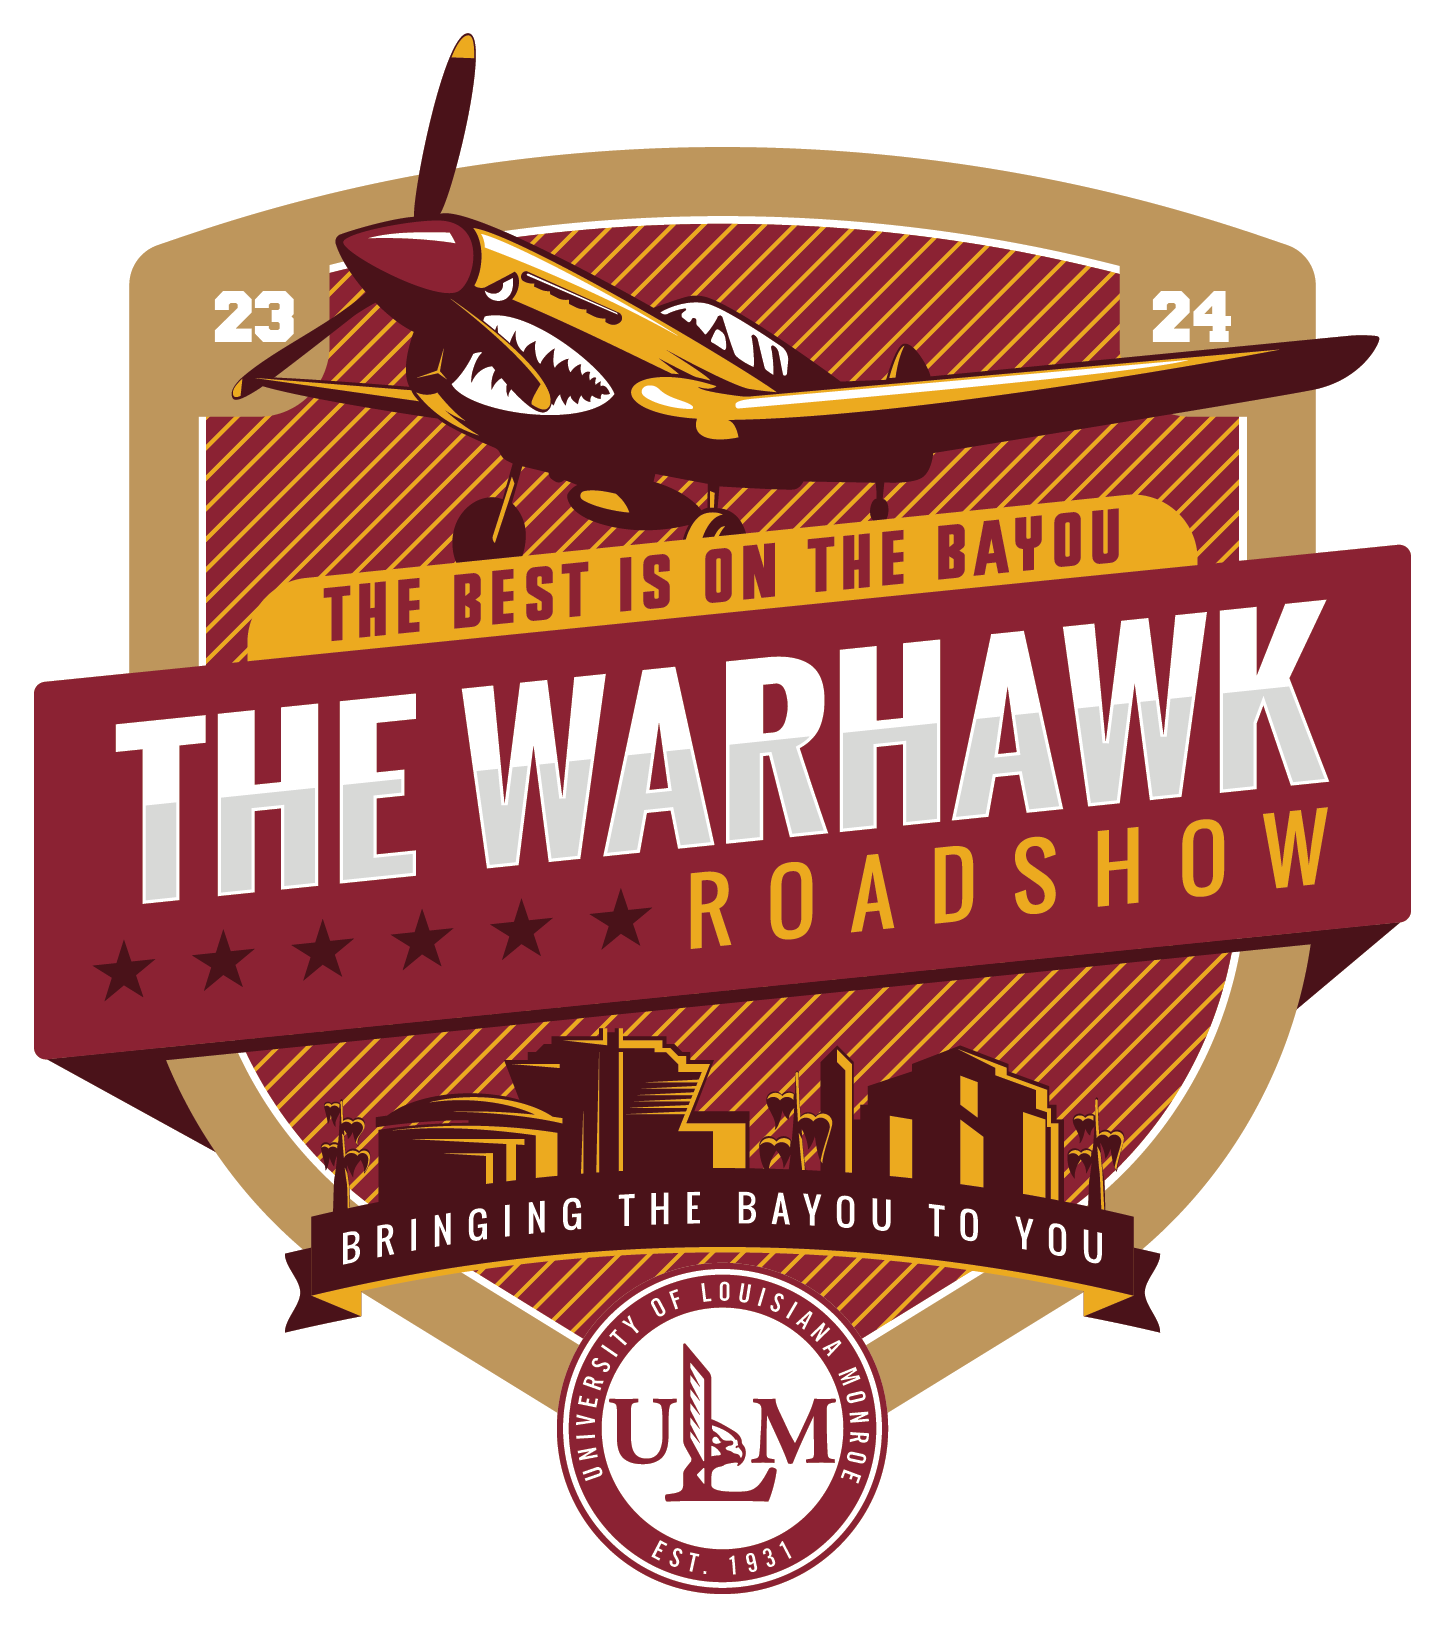 The Warhawk Roadshow